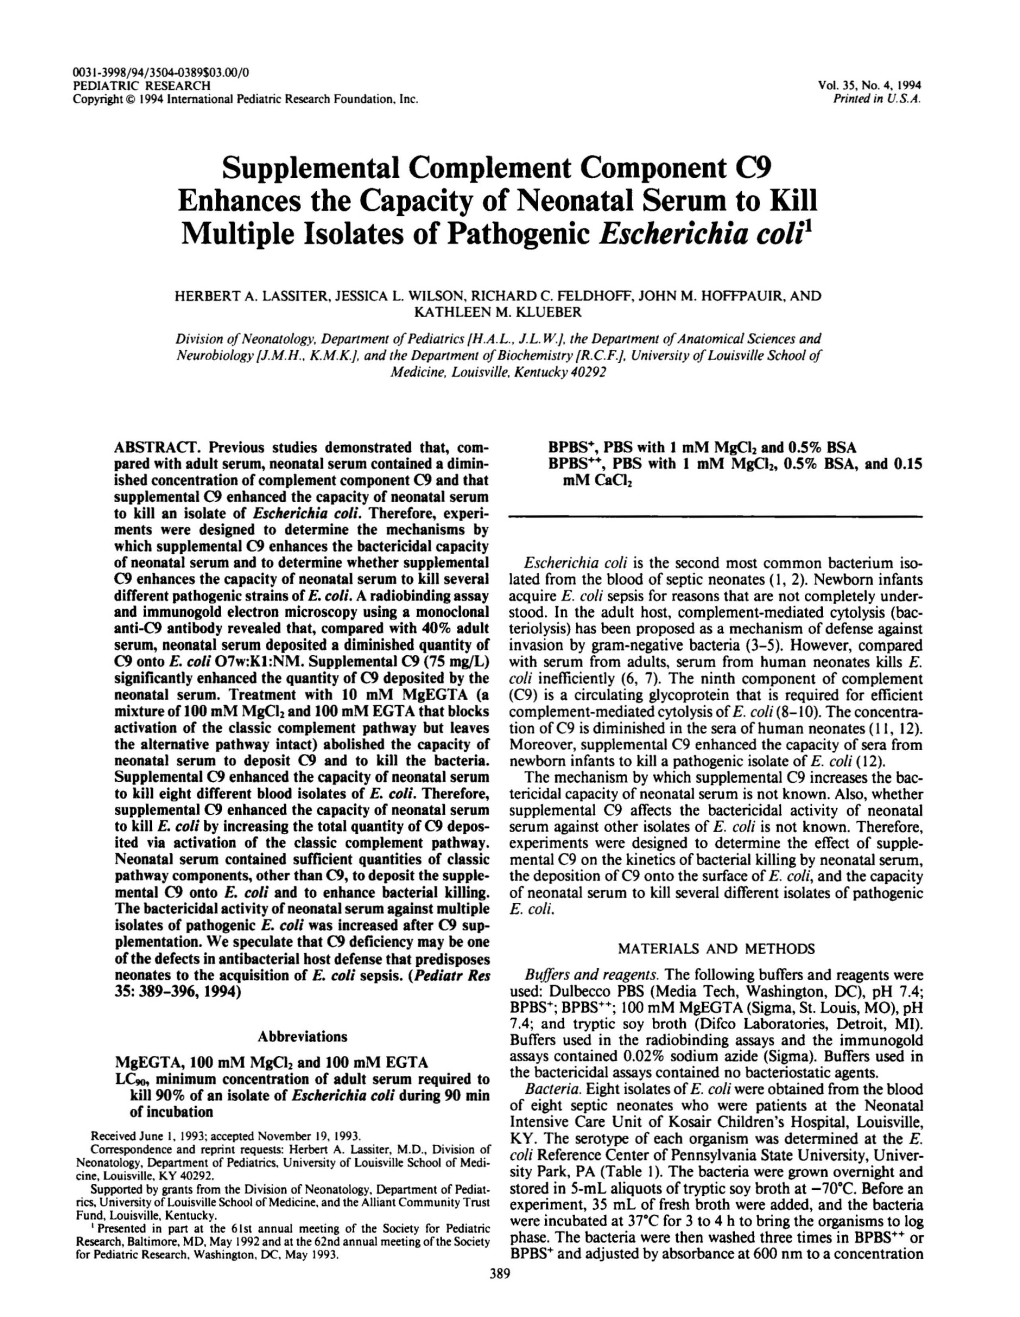 Supplemental Complement Component C9 Enhances the Capacity of Neonatal Serum to Kill Multiple Isolates of Pathogenic Escherichia Coli'